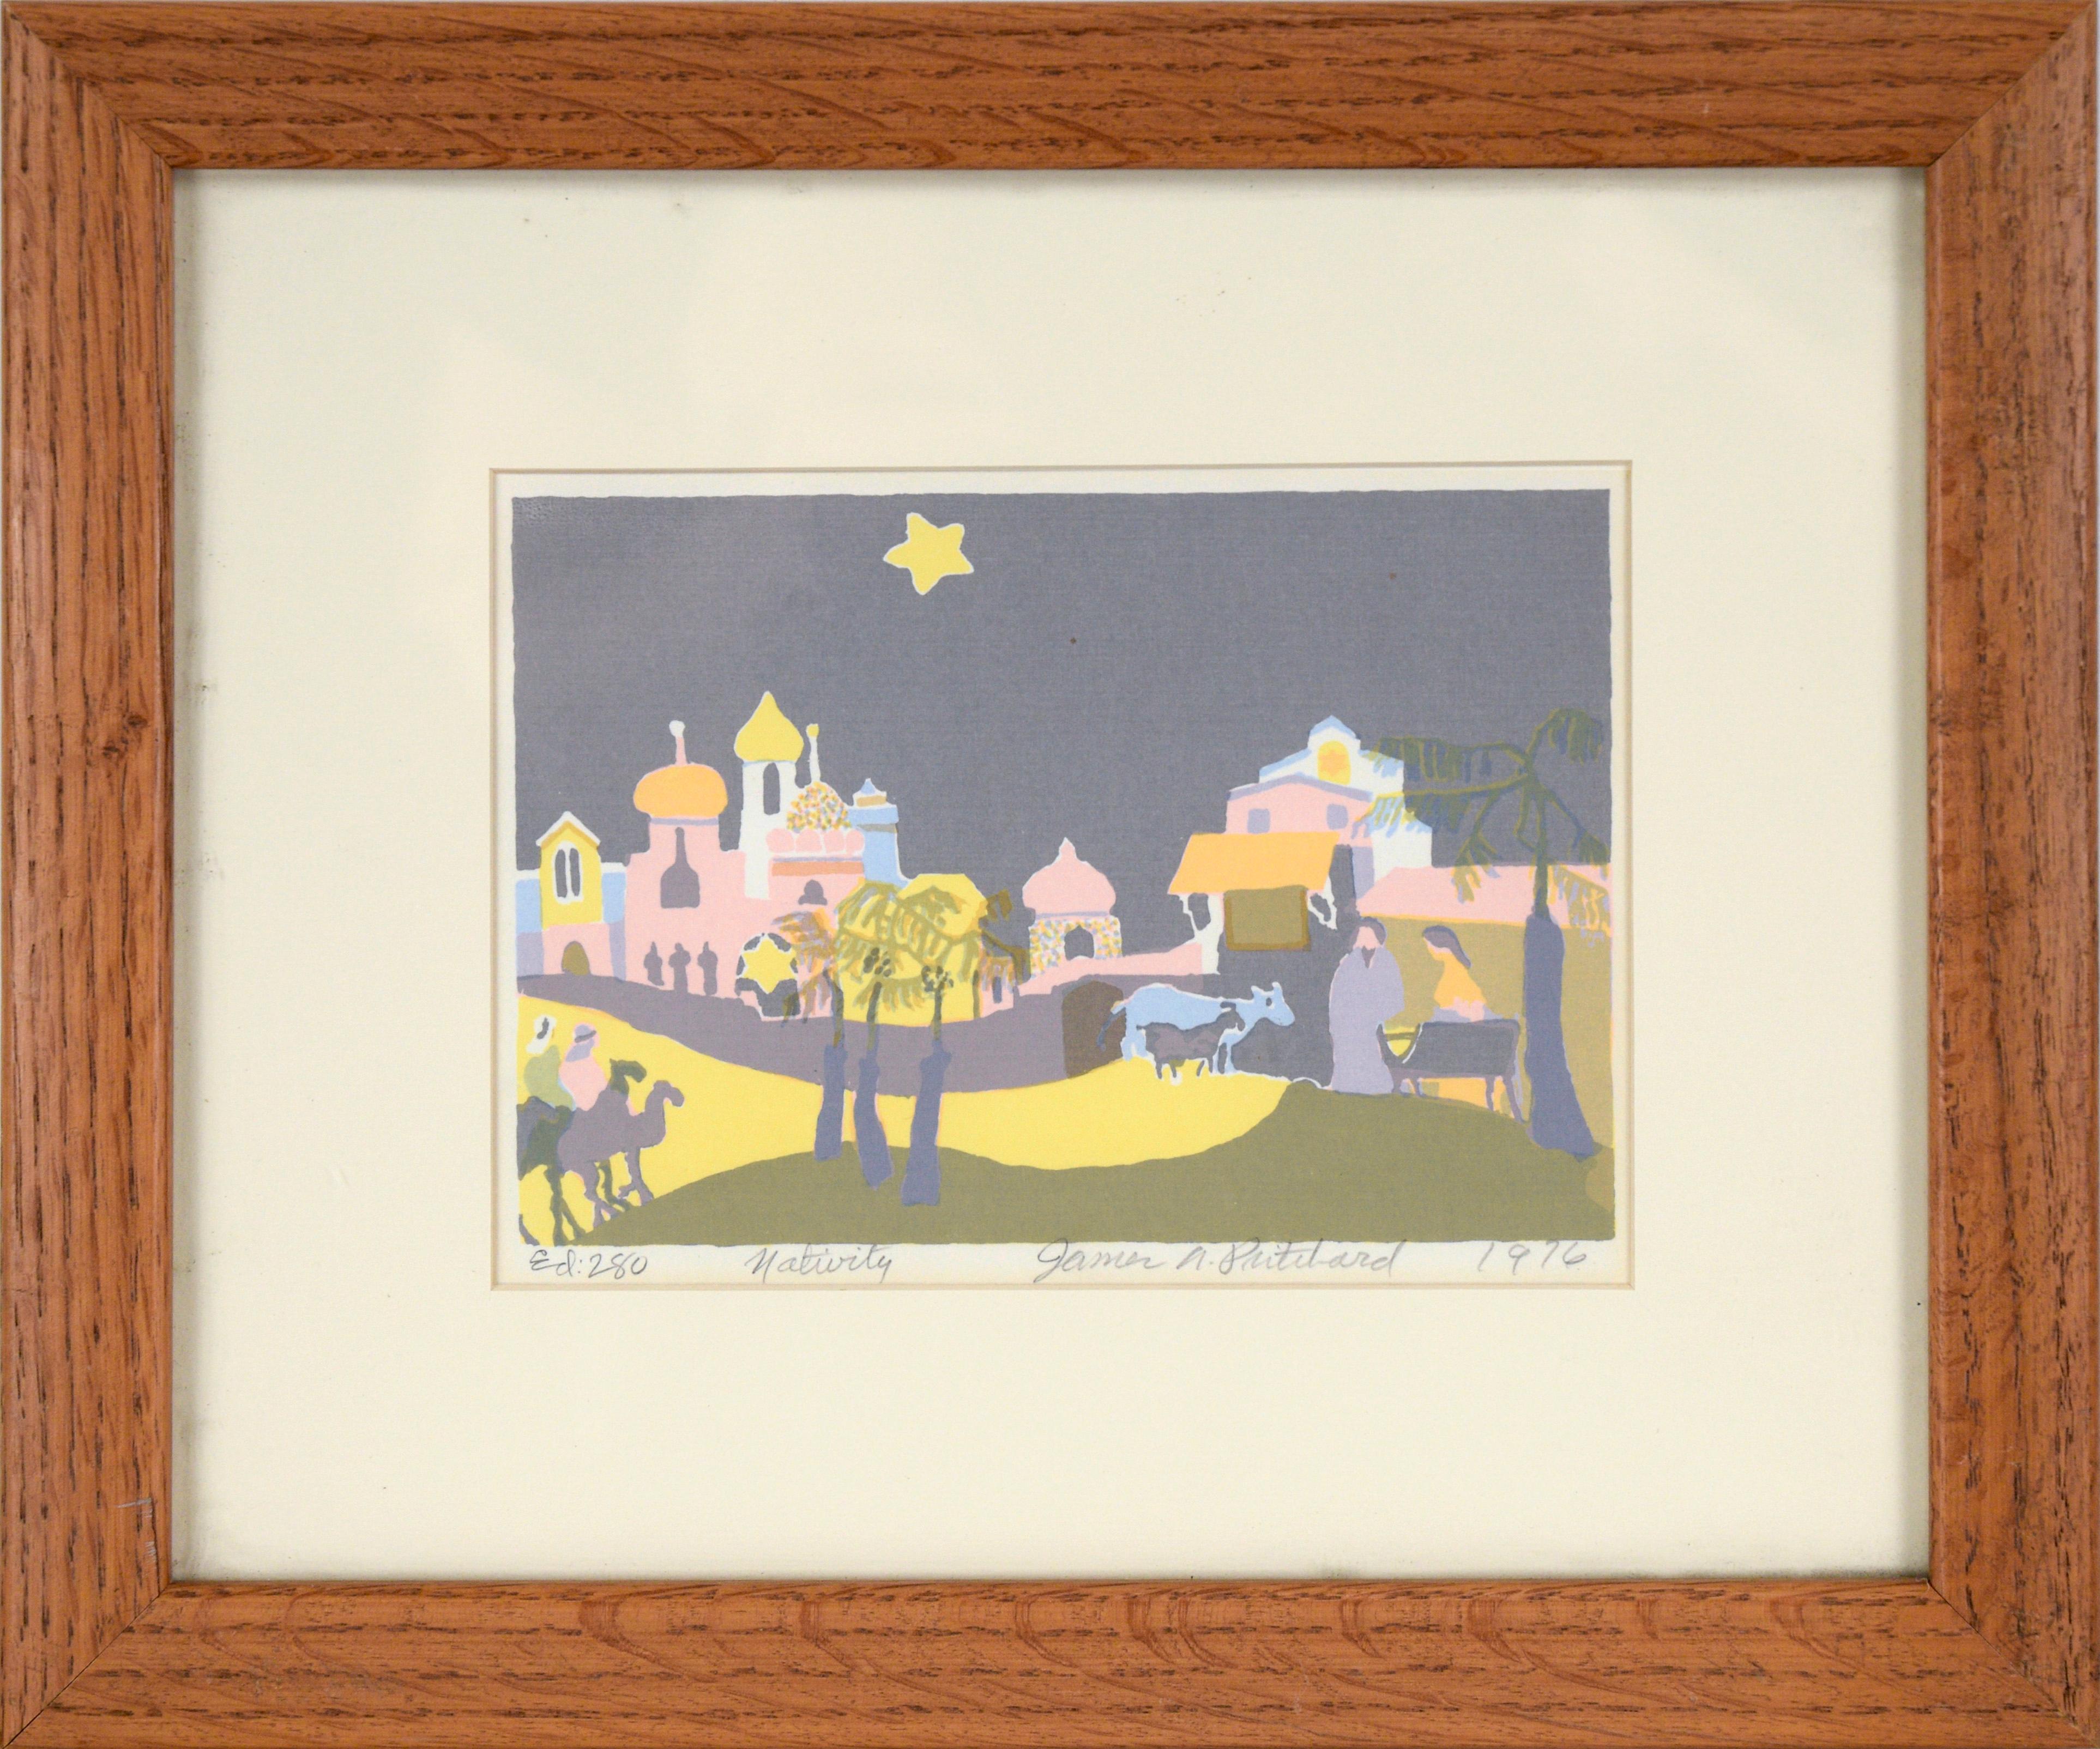 James A. Pritchard Figurative Print - "Nativity" Modernist Landscape Screen Print in Ink on Paper - 